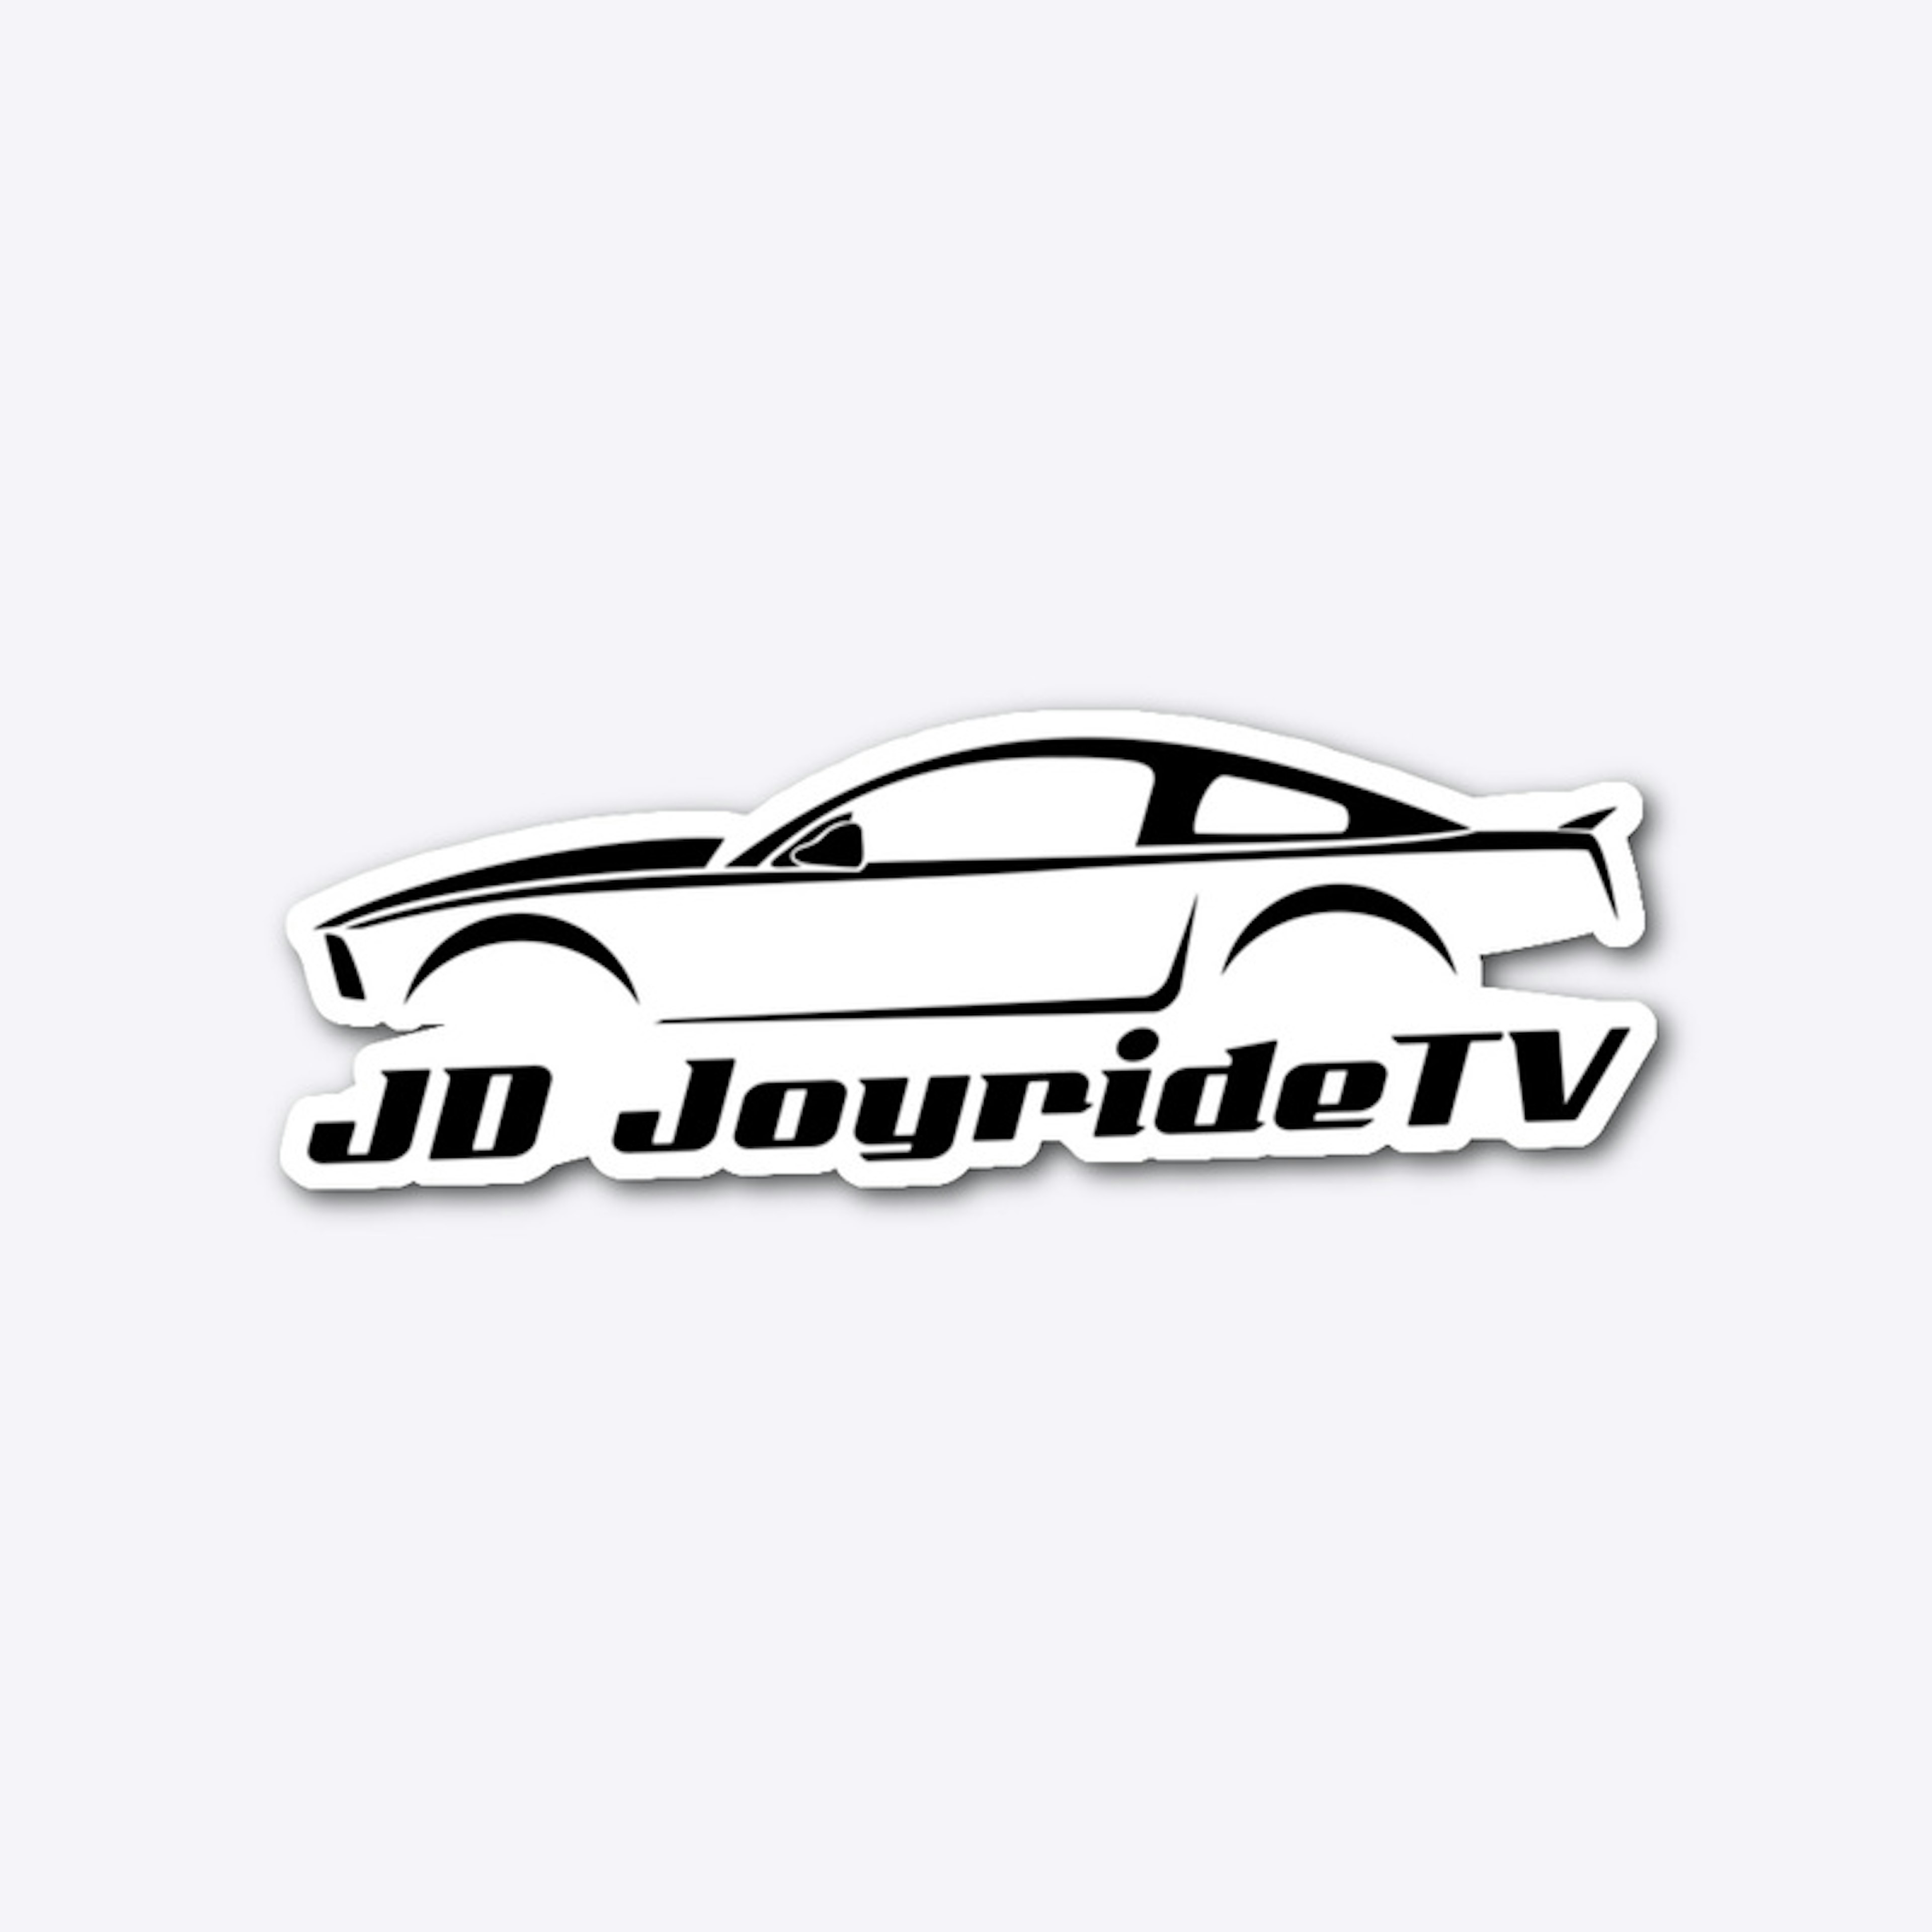 JD JoyrideTV Sticker